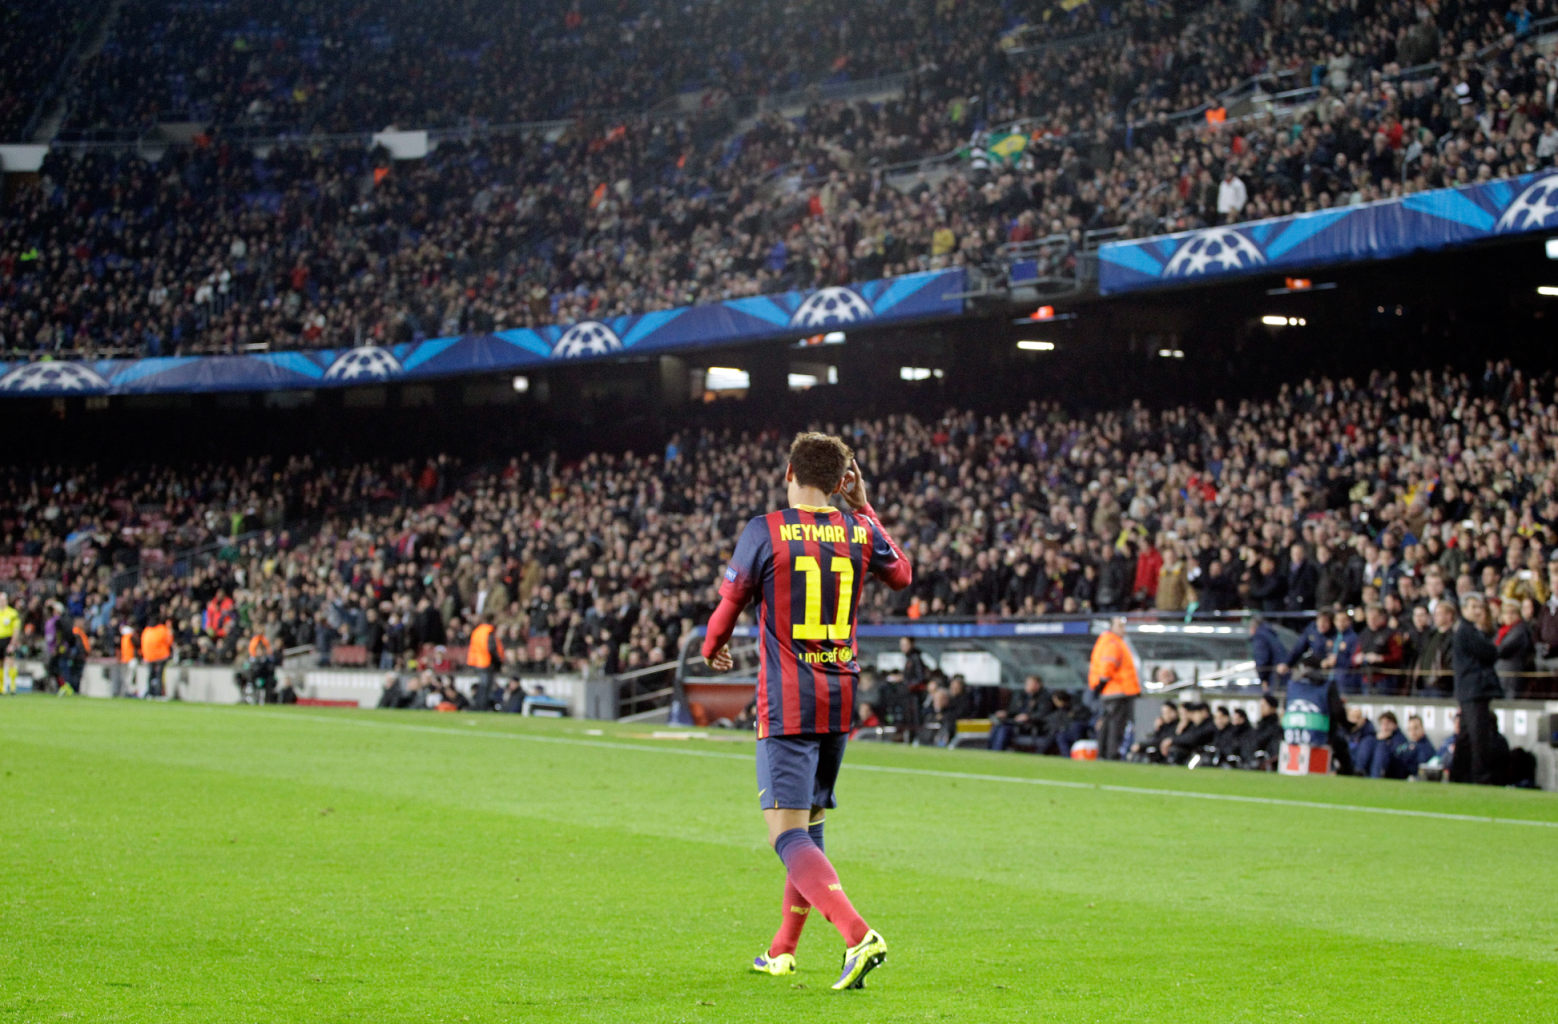 Neymar becoming the new Barcelona idol